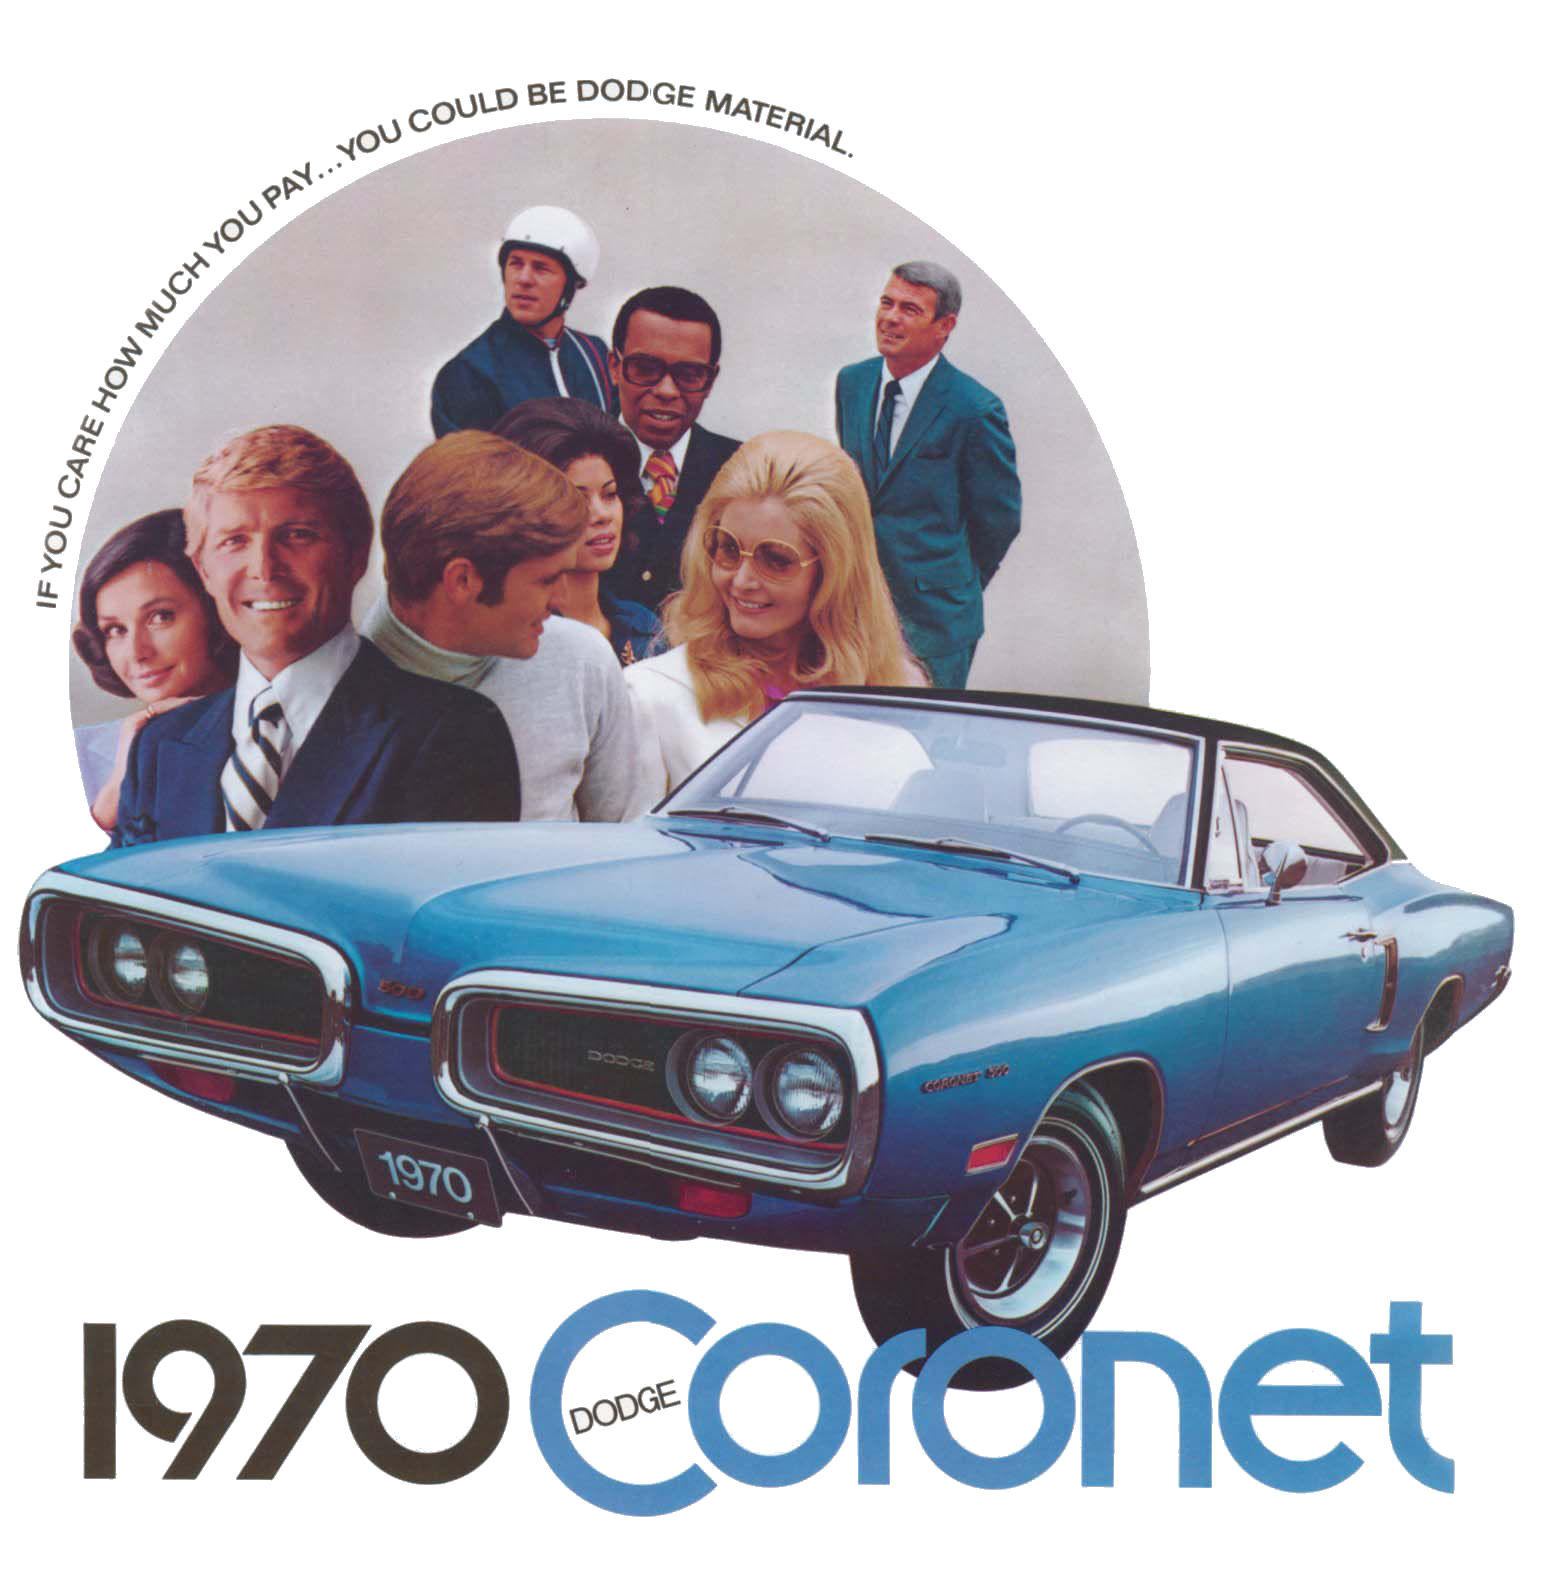 1970 Dodge Coronet Brochure